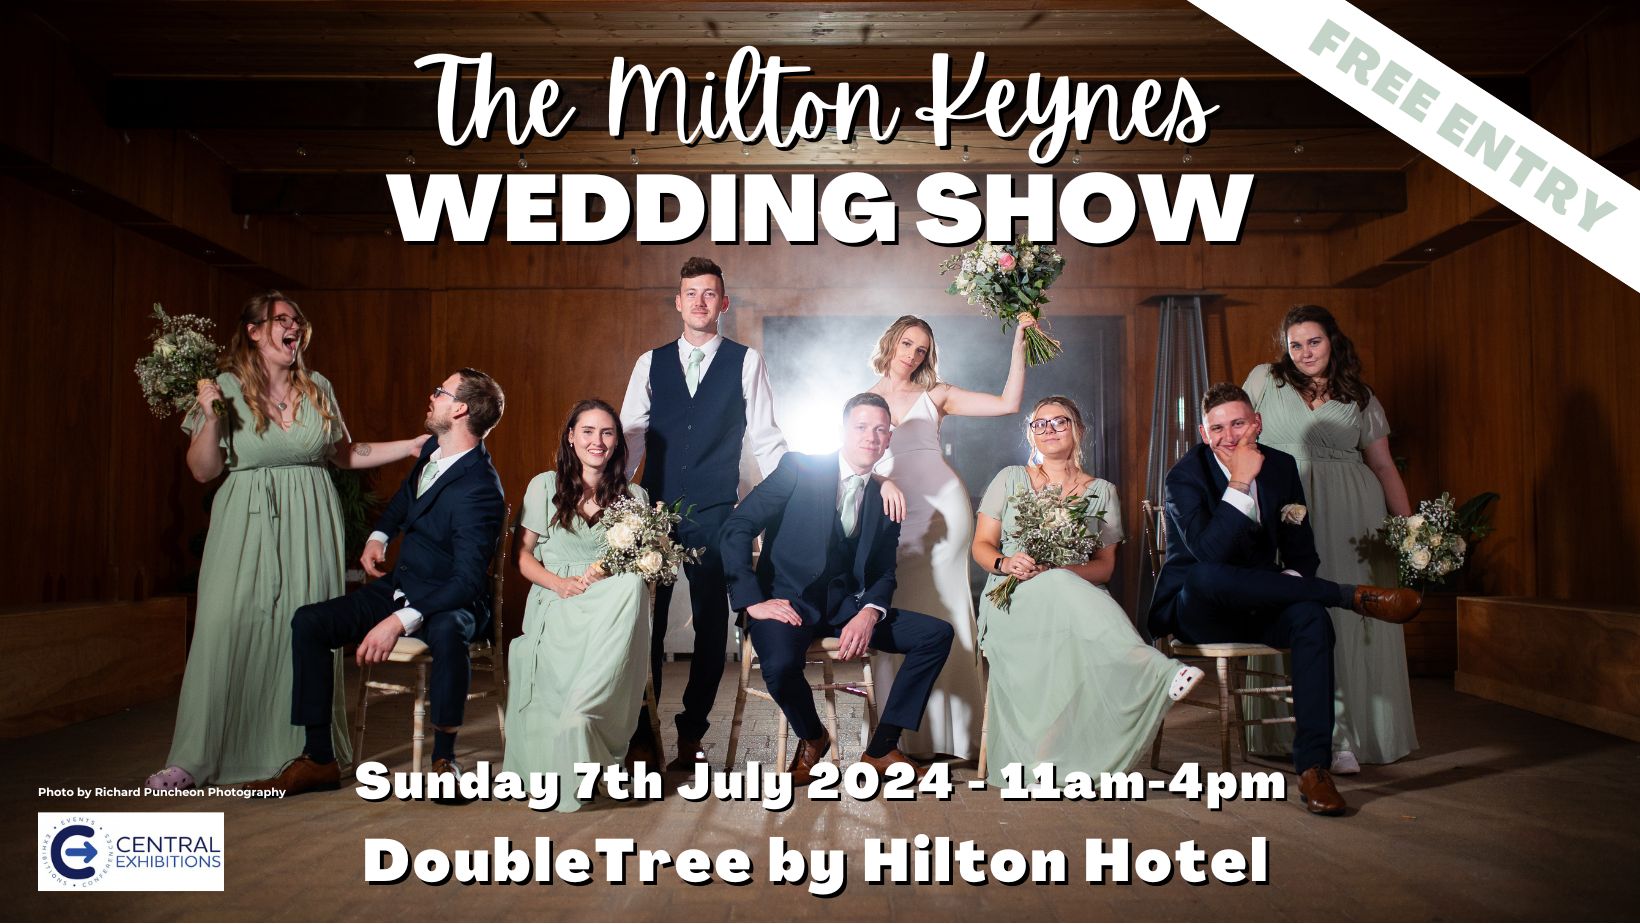 Milton Keynes Wedding Show, DoubleTree by Hilton Hotel (Stadium MK) - Sunday 7th July 2024